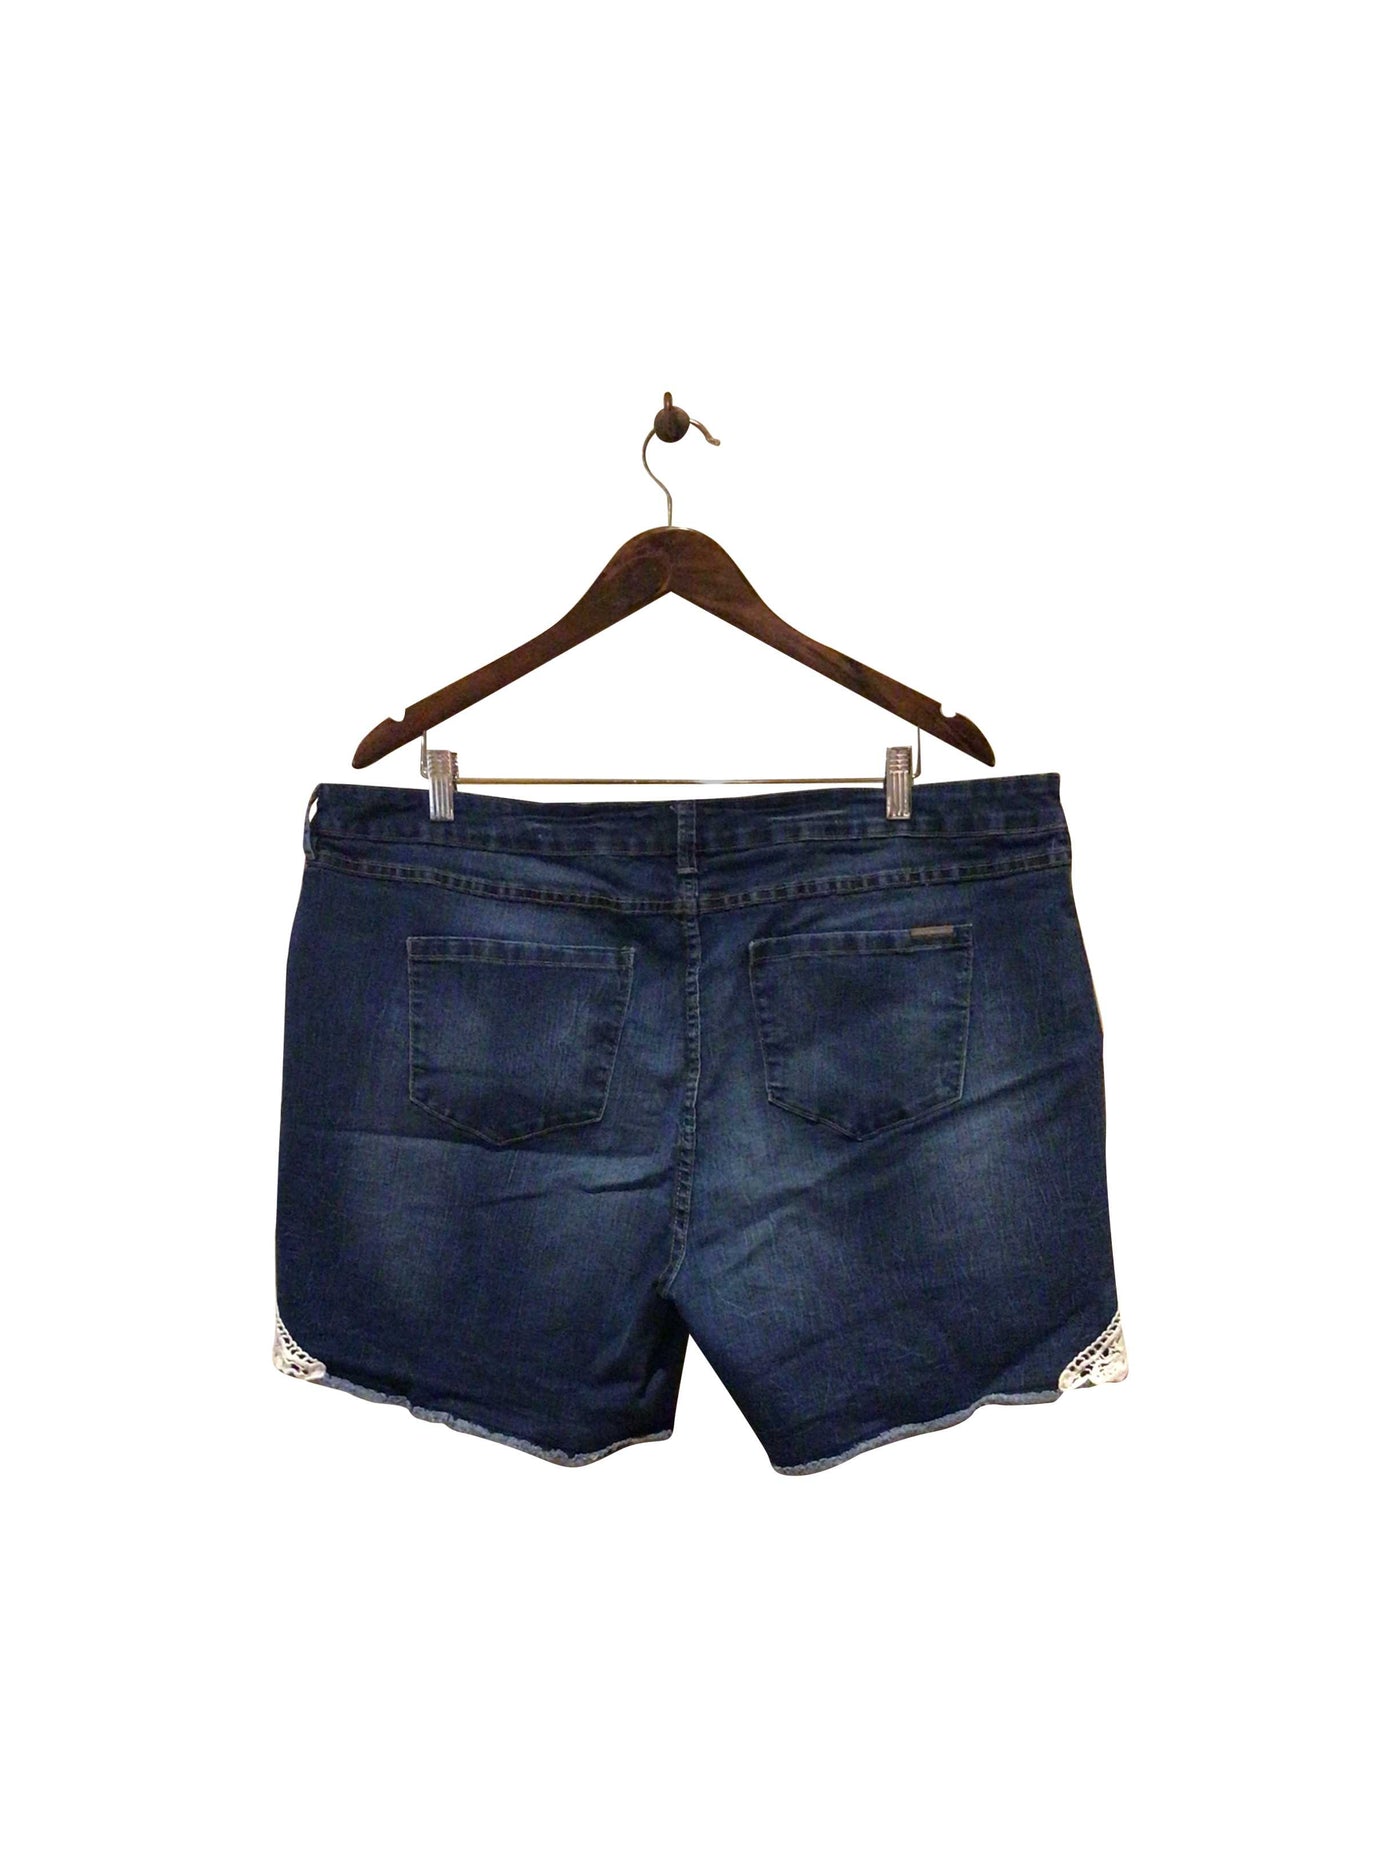 RICKI'S Regular fit Jean Shorts in Blue  -  36  14.90 Koop